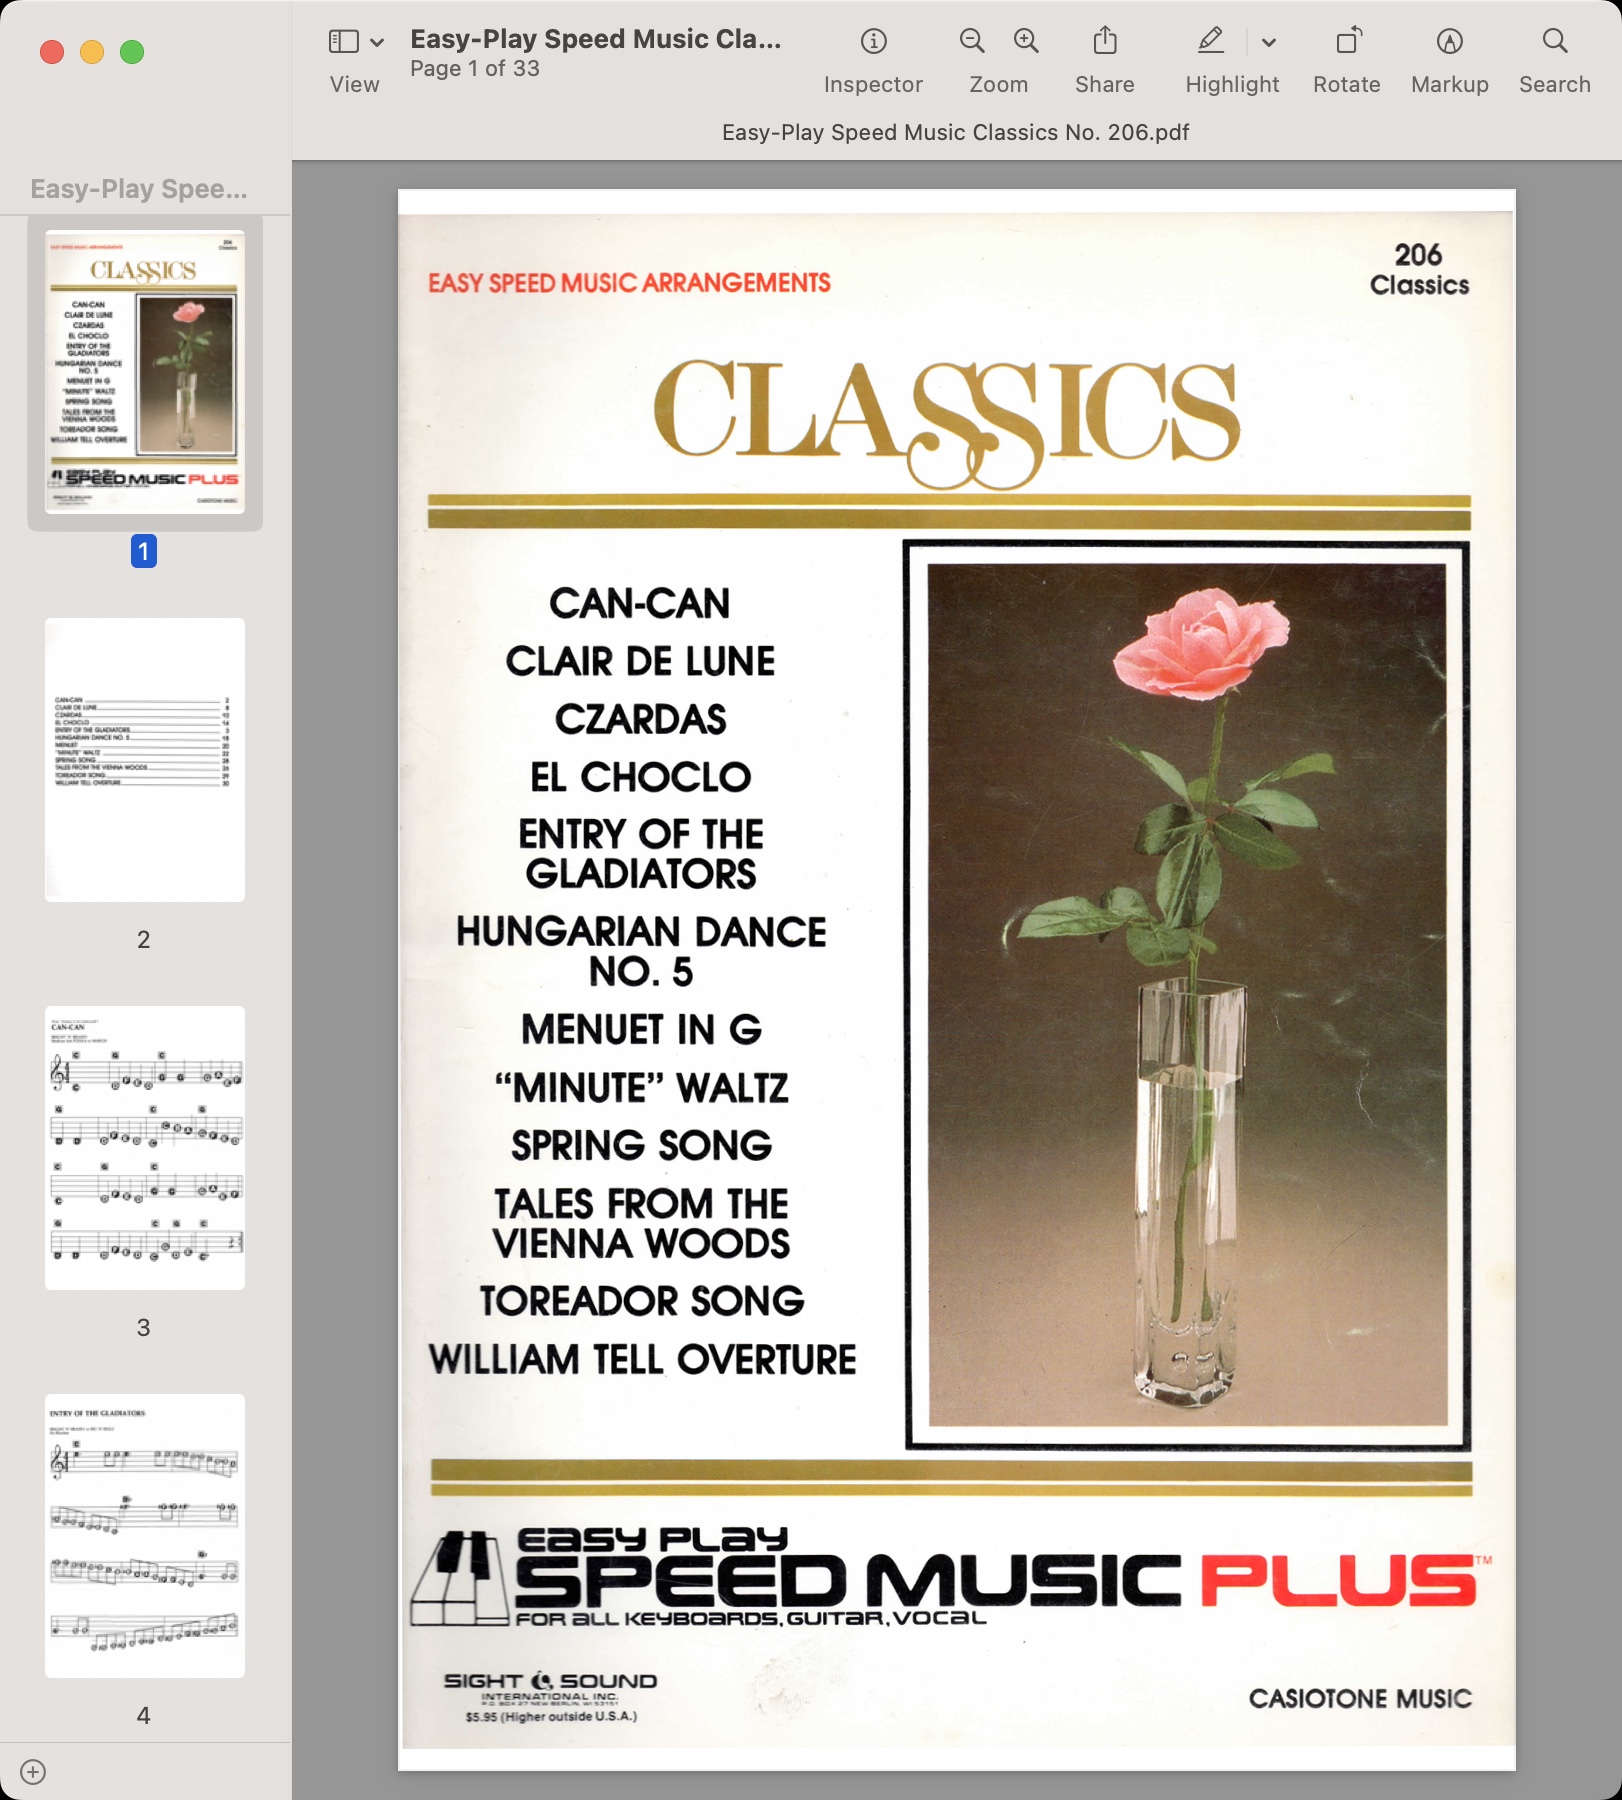 Easy-Play Speed Music Classics No. 206.jpg